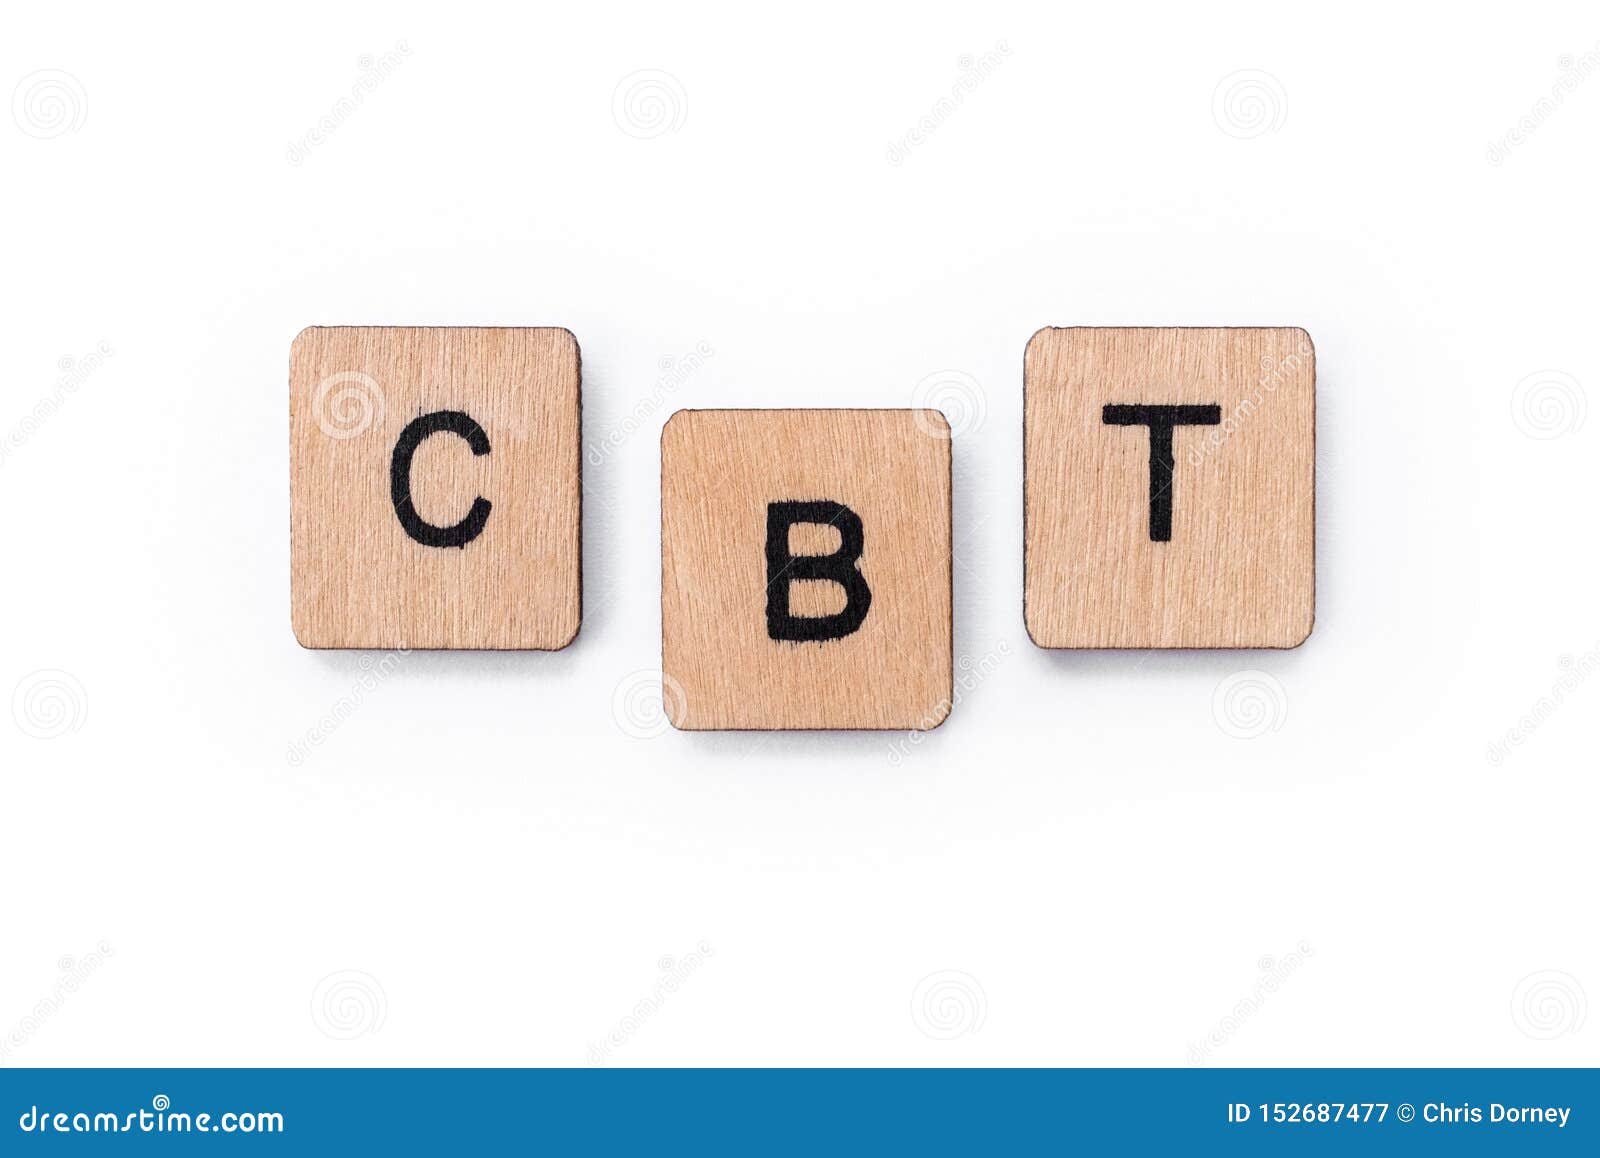 the abbreviation cbt